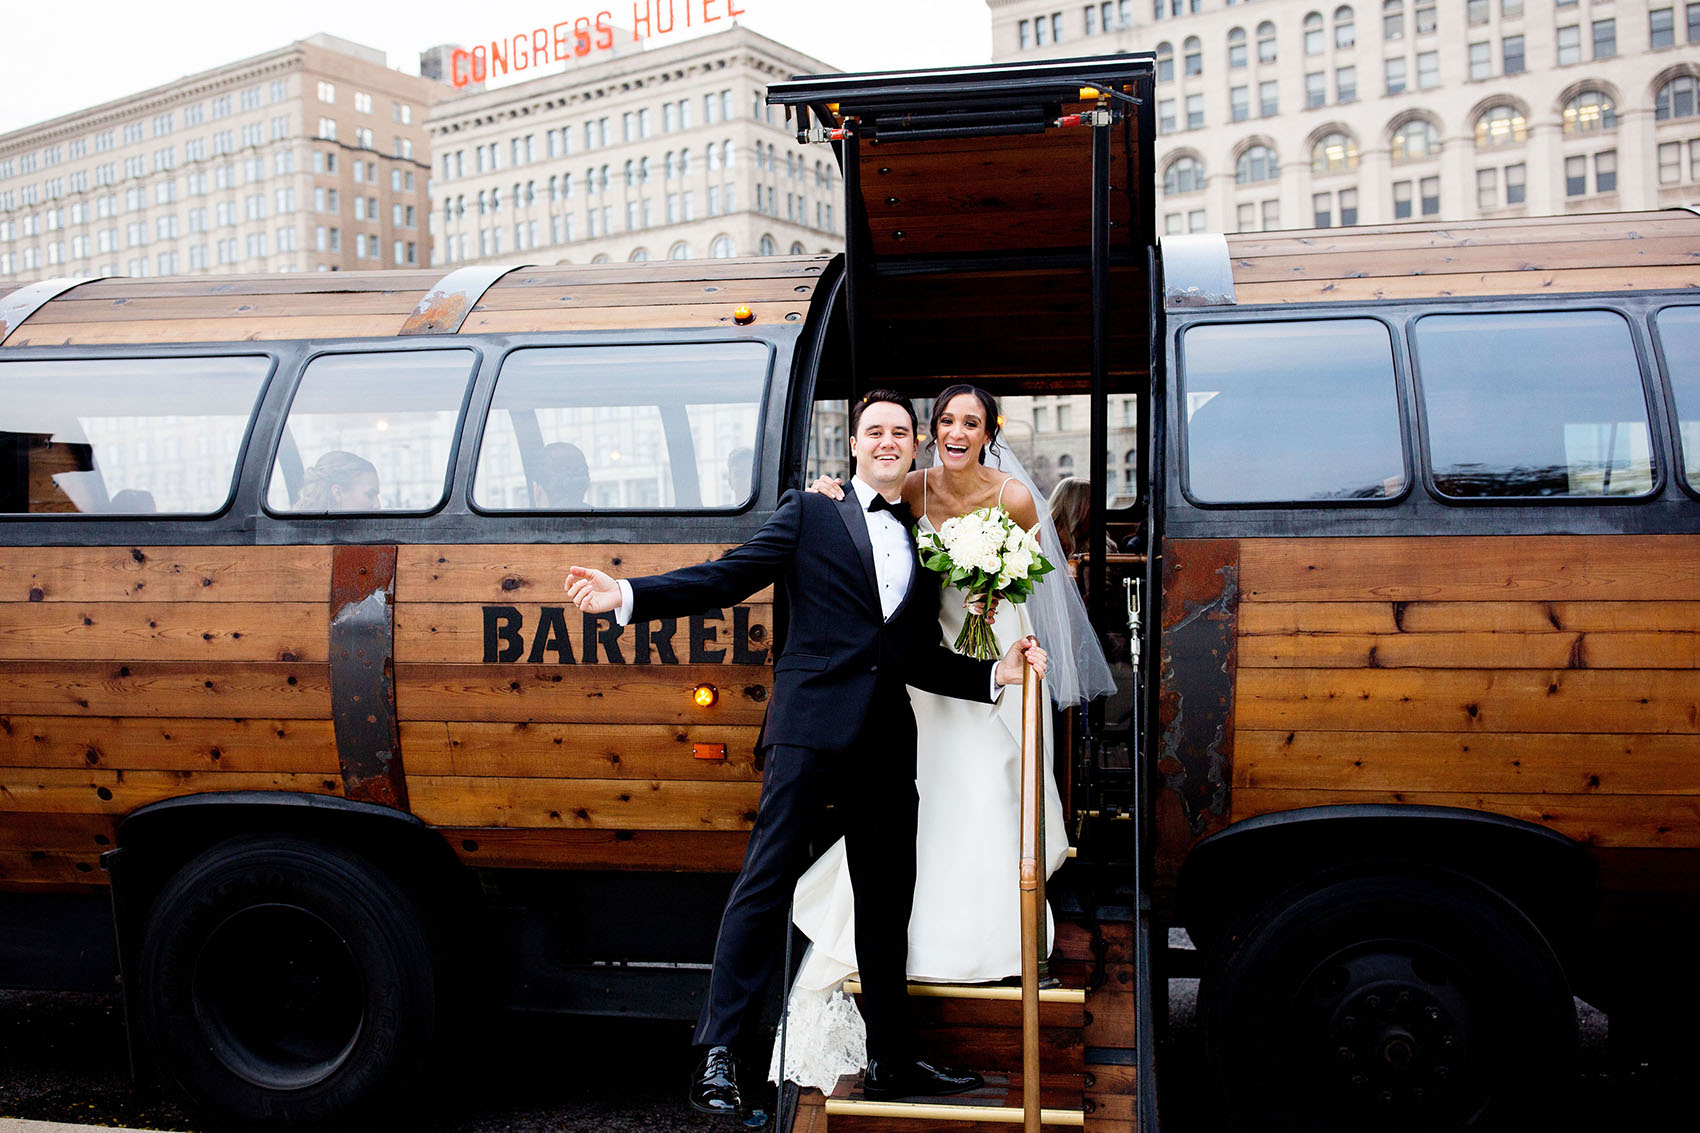 barrel bus chicago for wedding